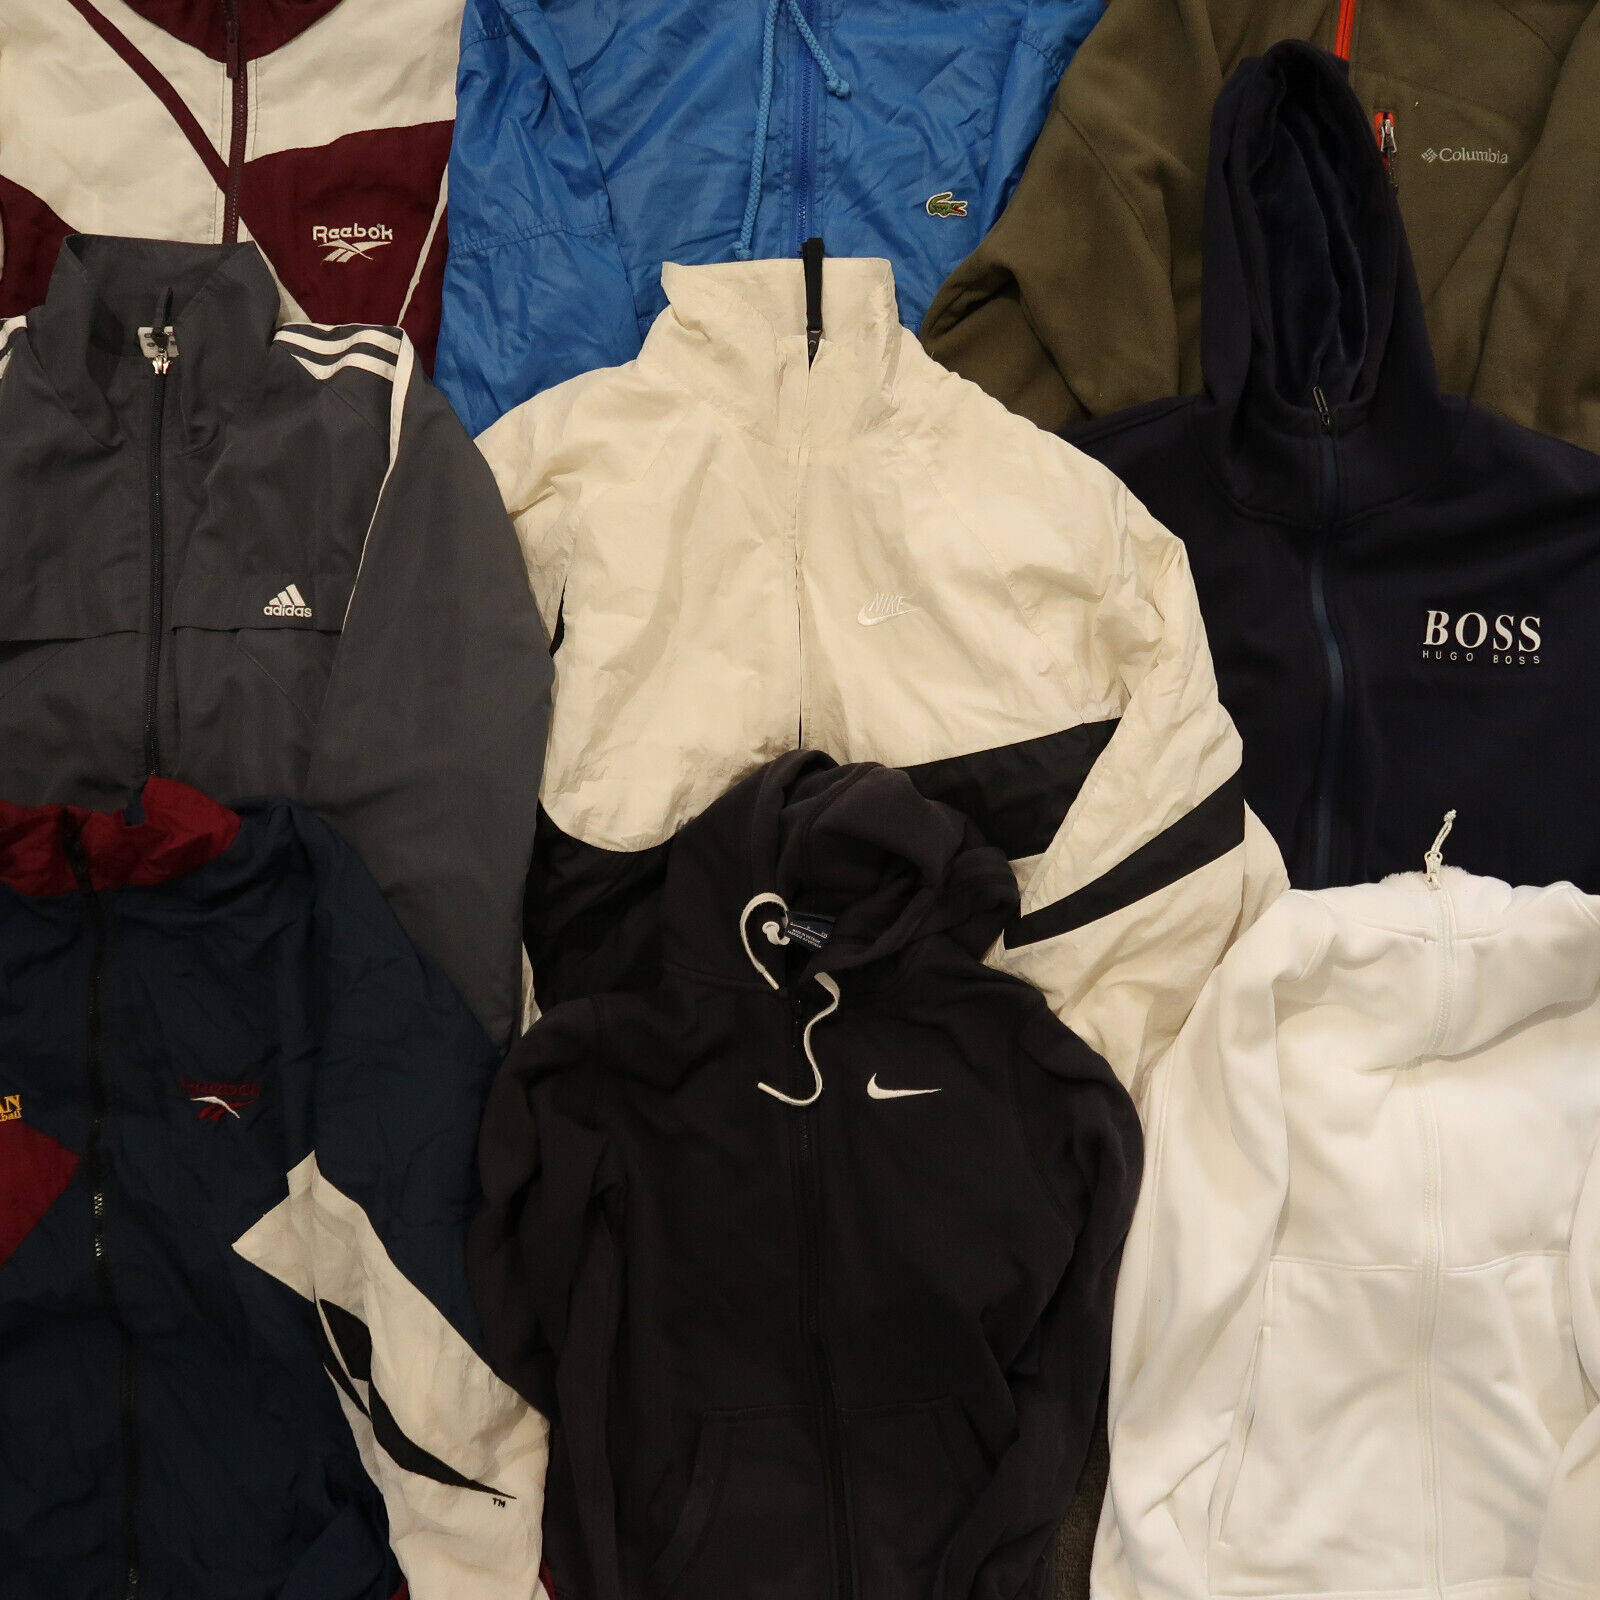 10x Branded Jackets Nike Adidas Clothing Reseller Wholesale Bulk Lot Bundle Vtg Assorted Does Not Apply